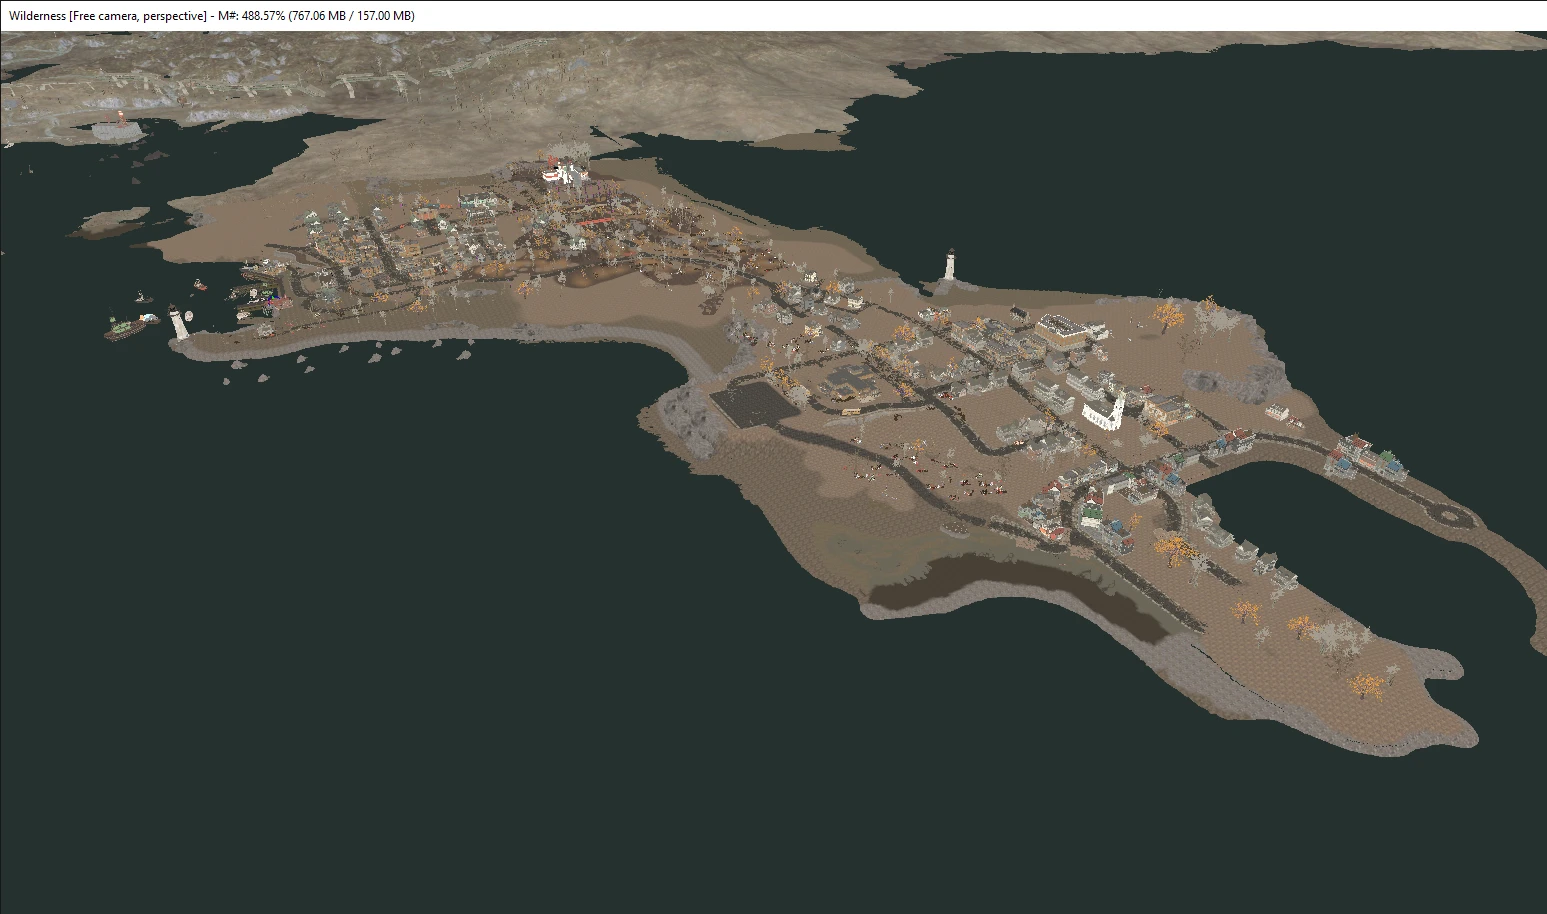 GTA Vice City Map 3D model